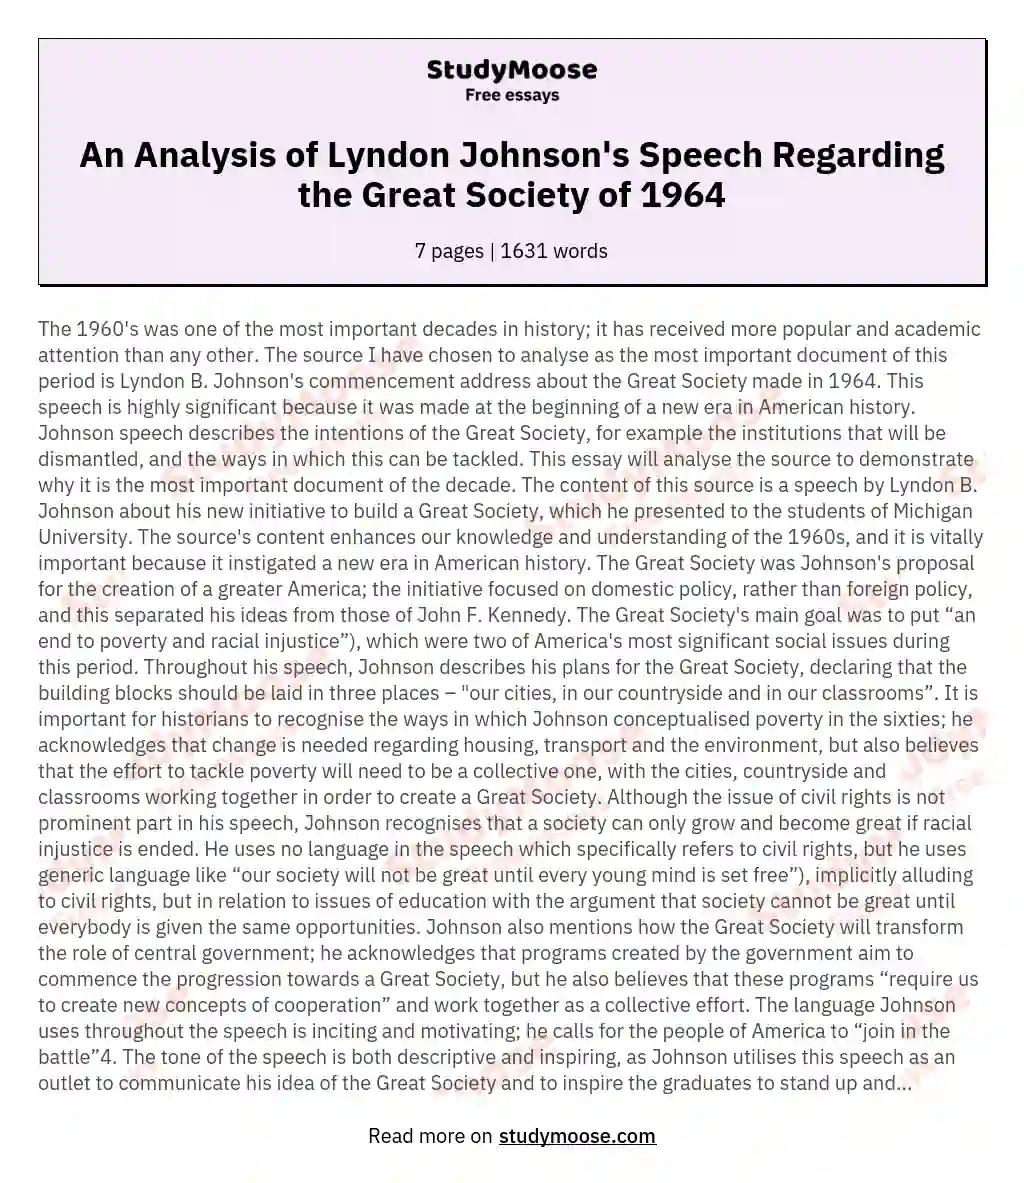 An Analysis of Lyndon Johnson's Speech Regarding the Great Society of 1964 essay